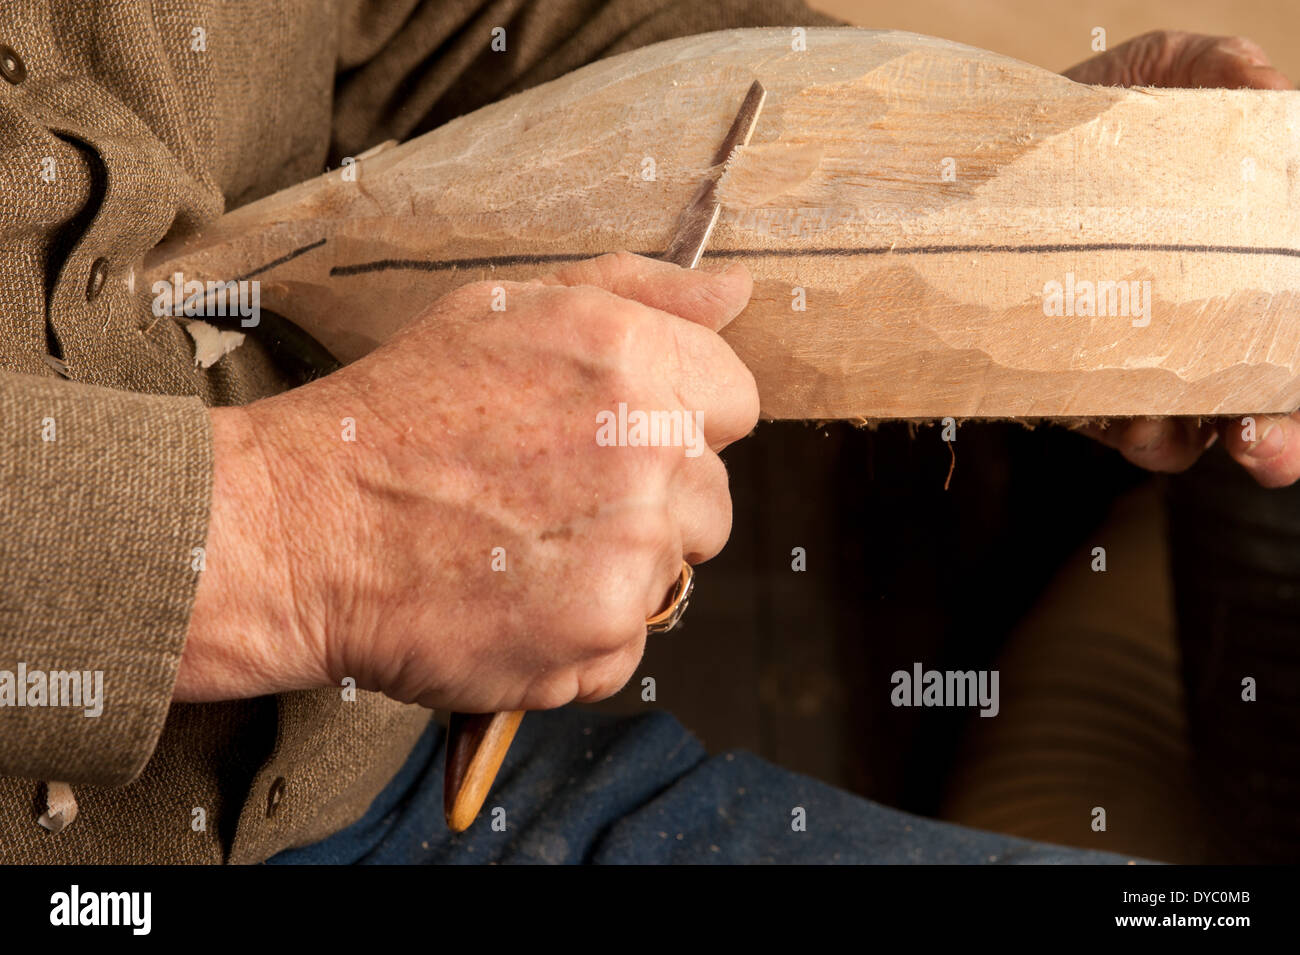 Hand carving a wooden bird decoy Stock Photo